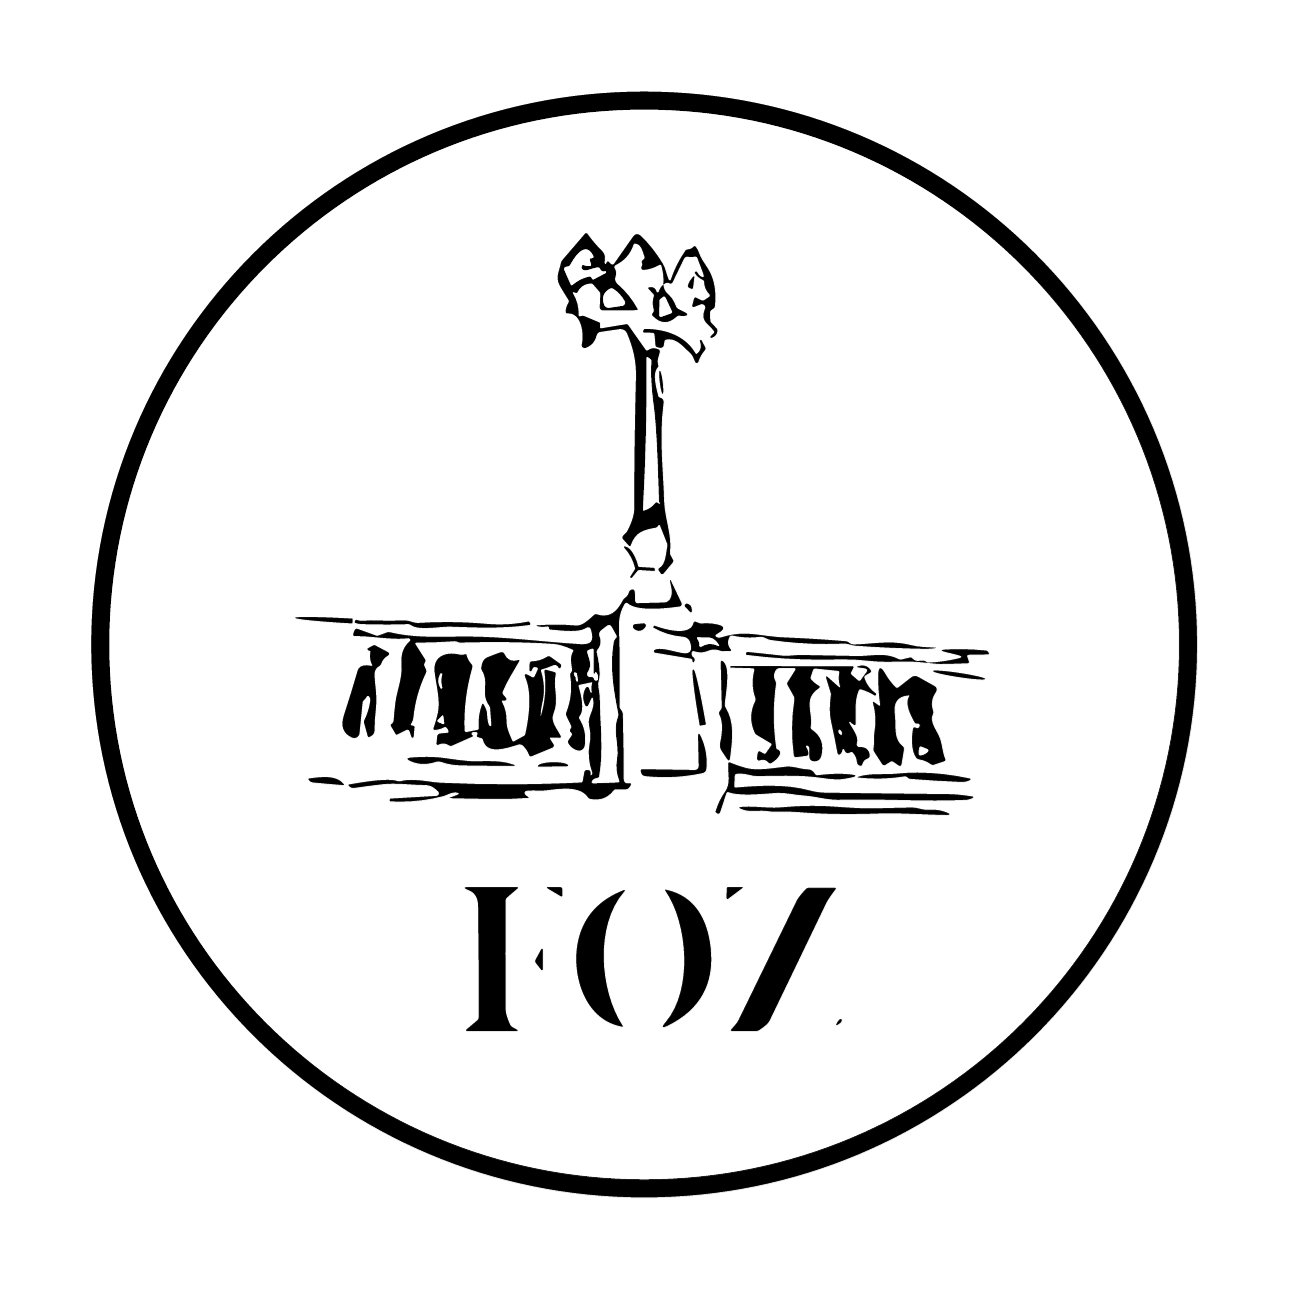 FOZ - Logos marca (4)